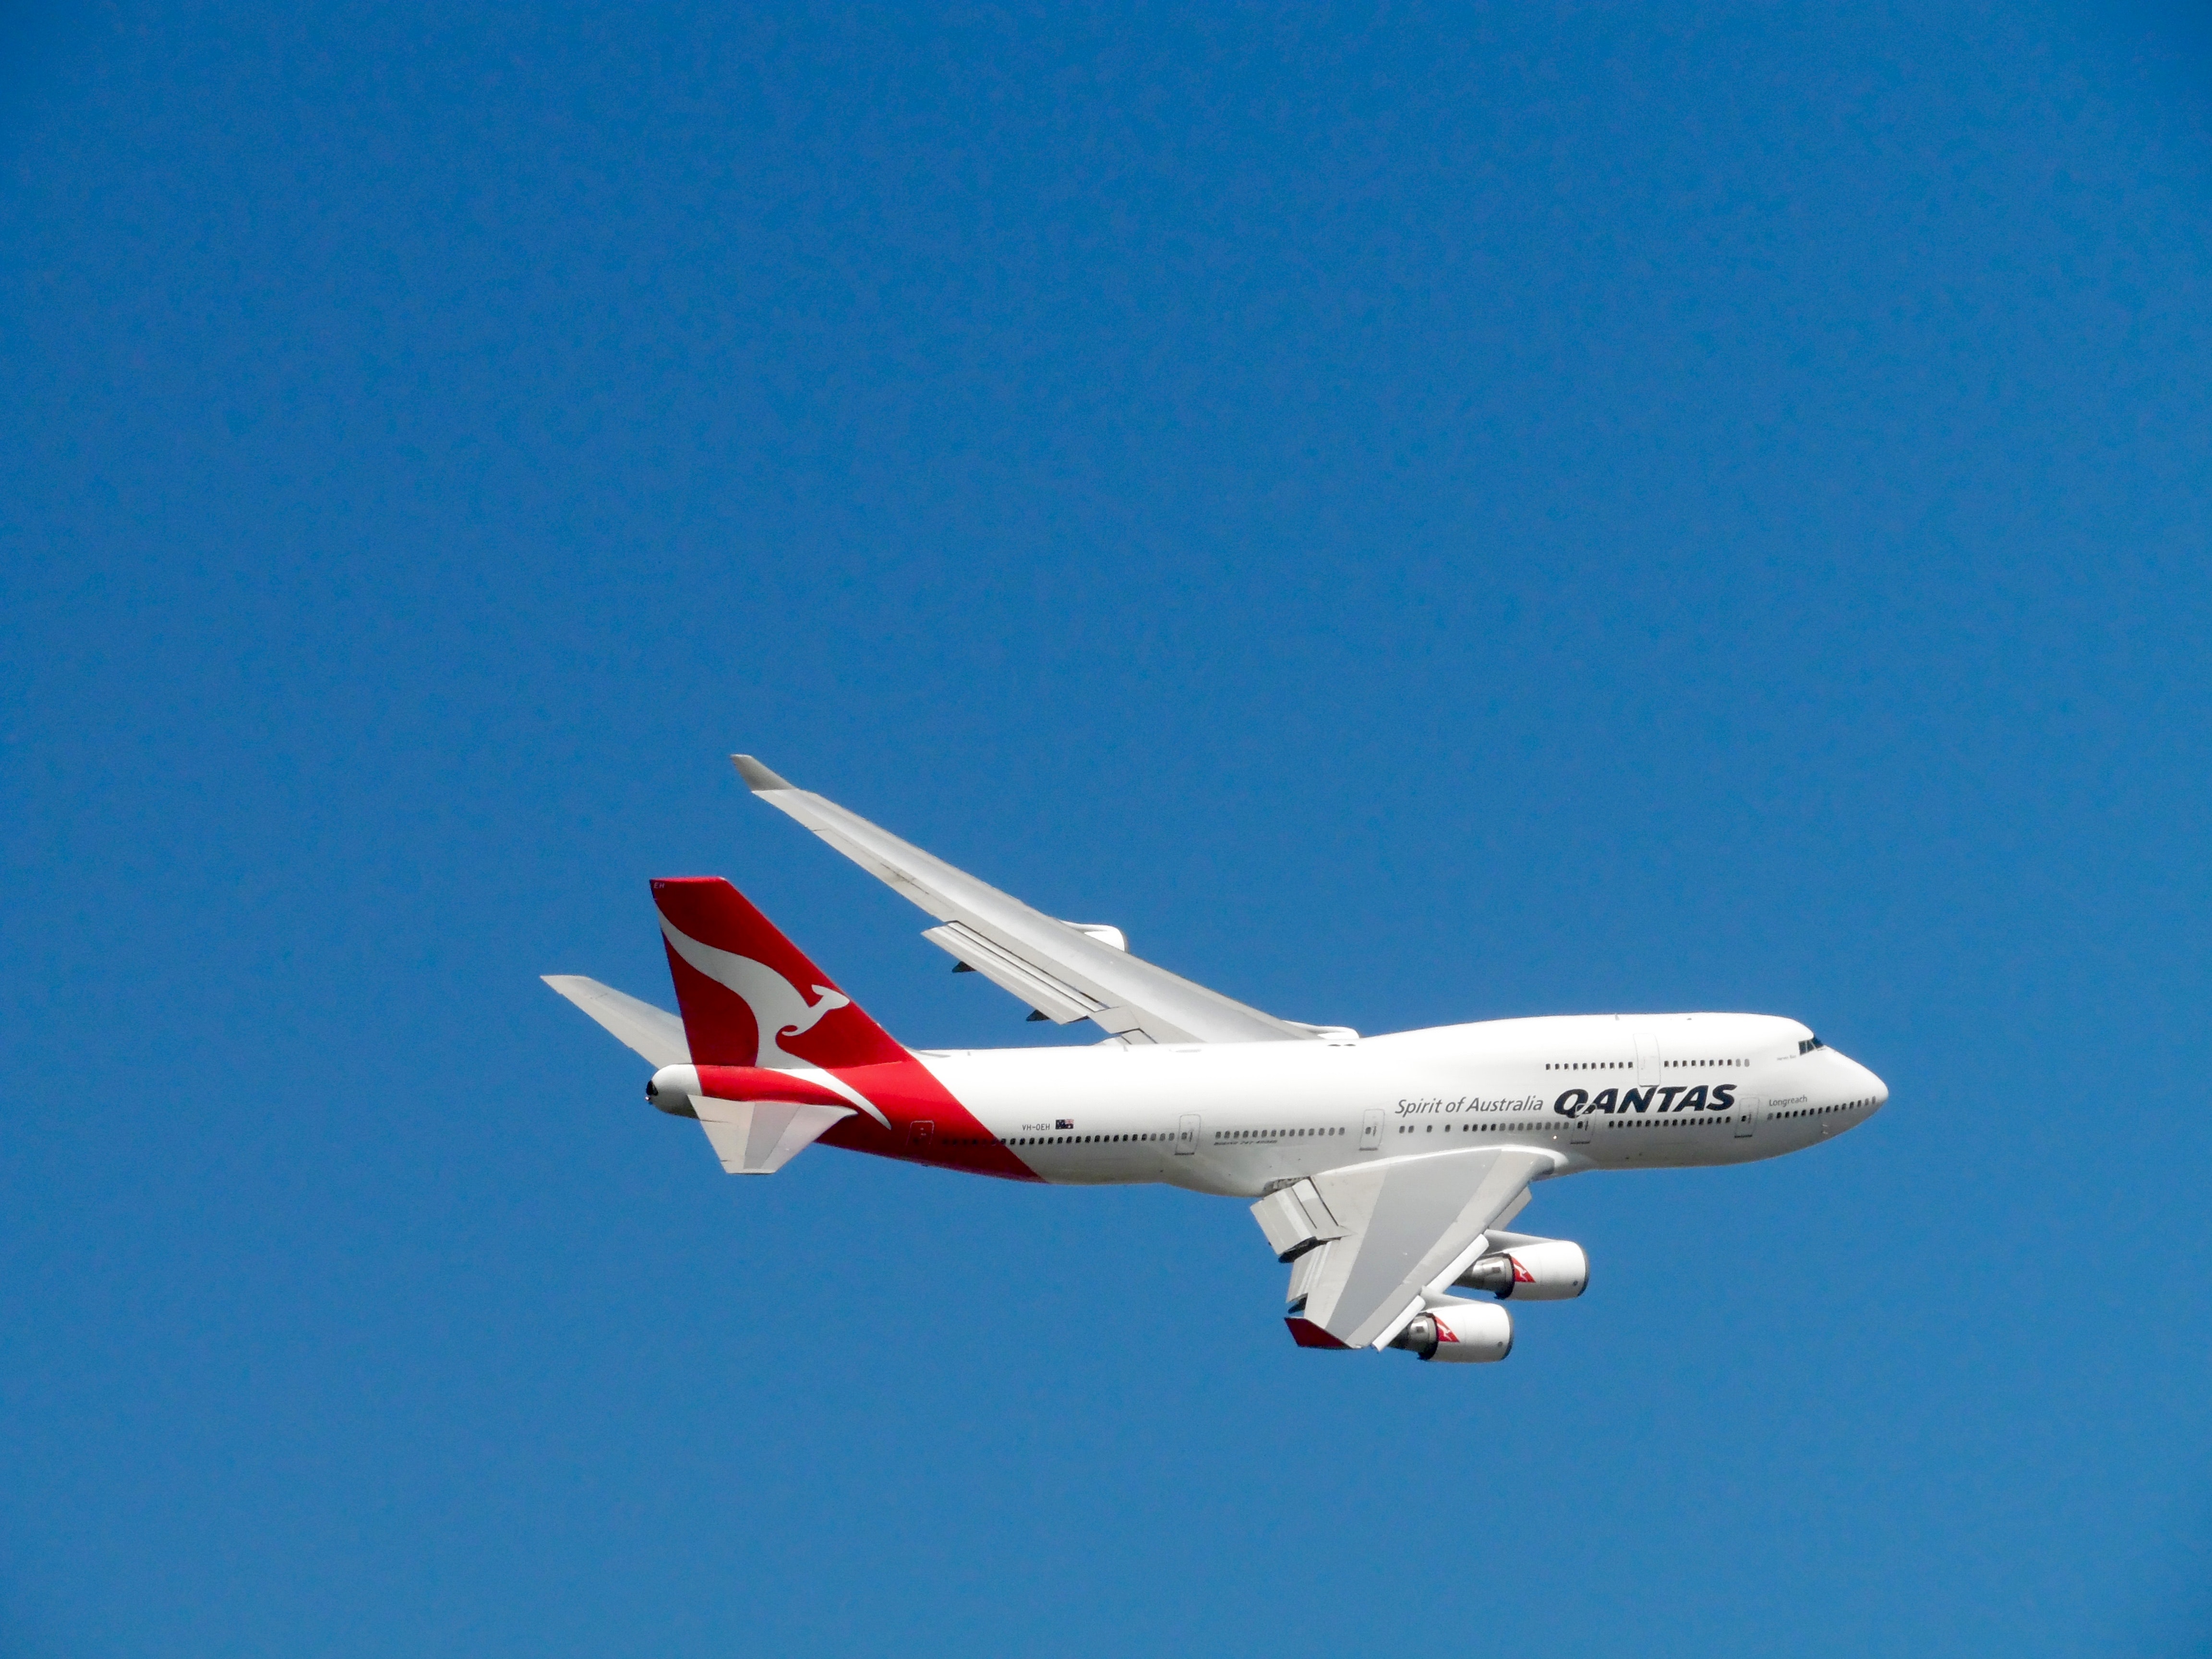 Qantas airlines plane on air photo